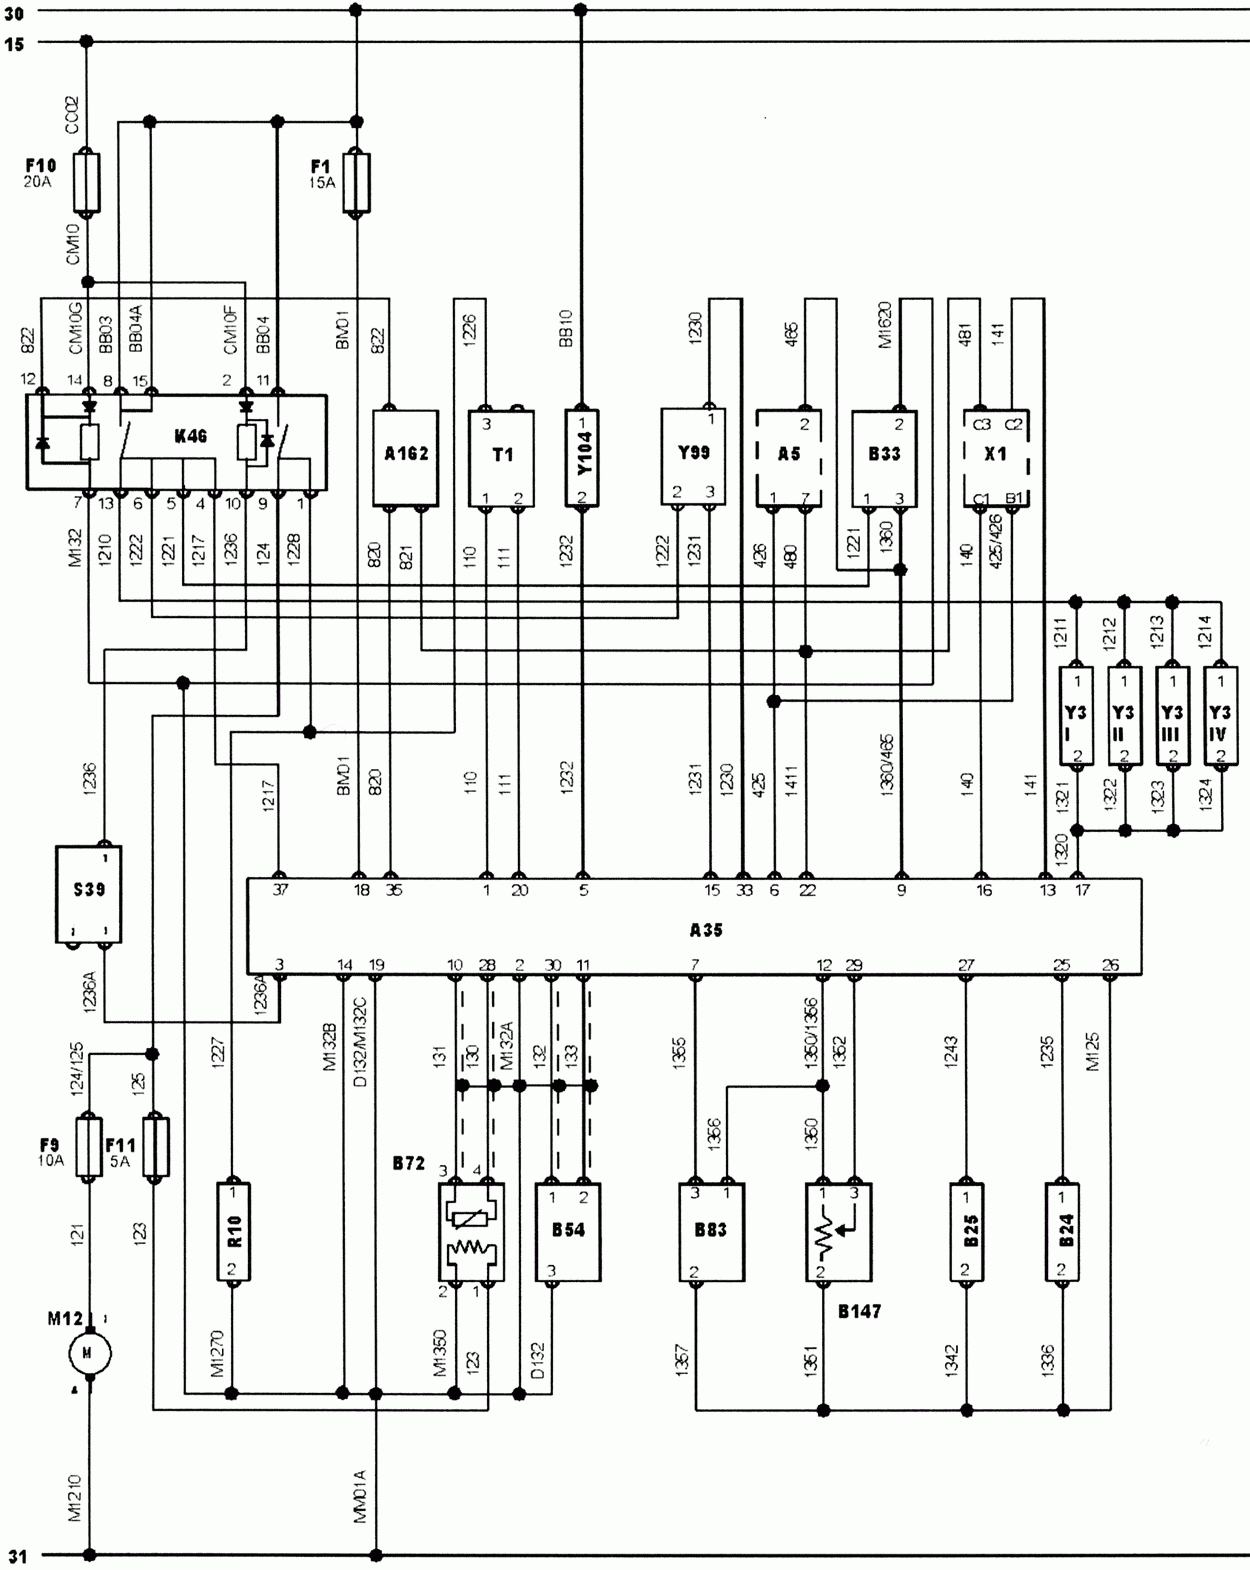 24 Volt Transformer Wiring Diagram With Nfz 5 2.gif | Eddy | Wire - 24 Volt Transformer Wiring Diagram